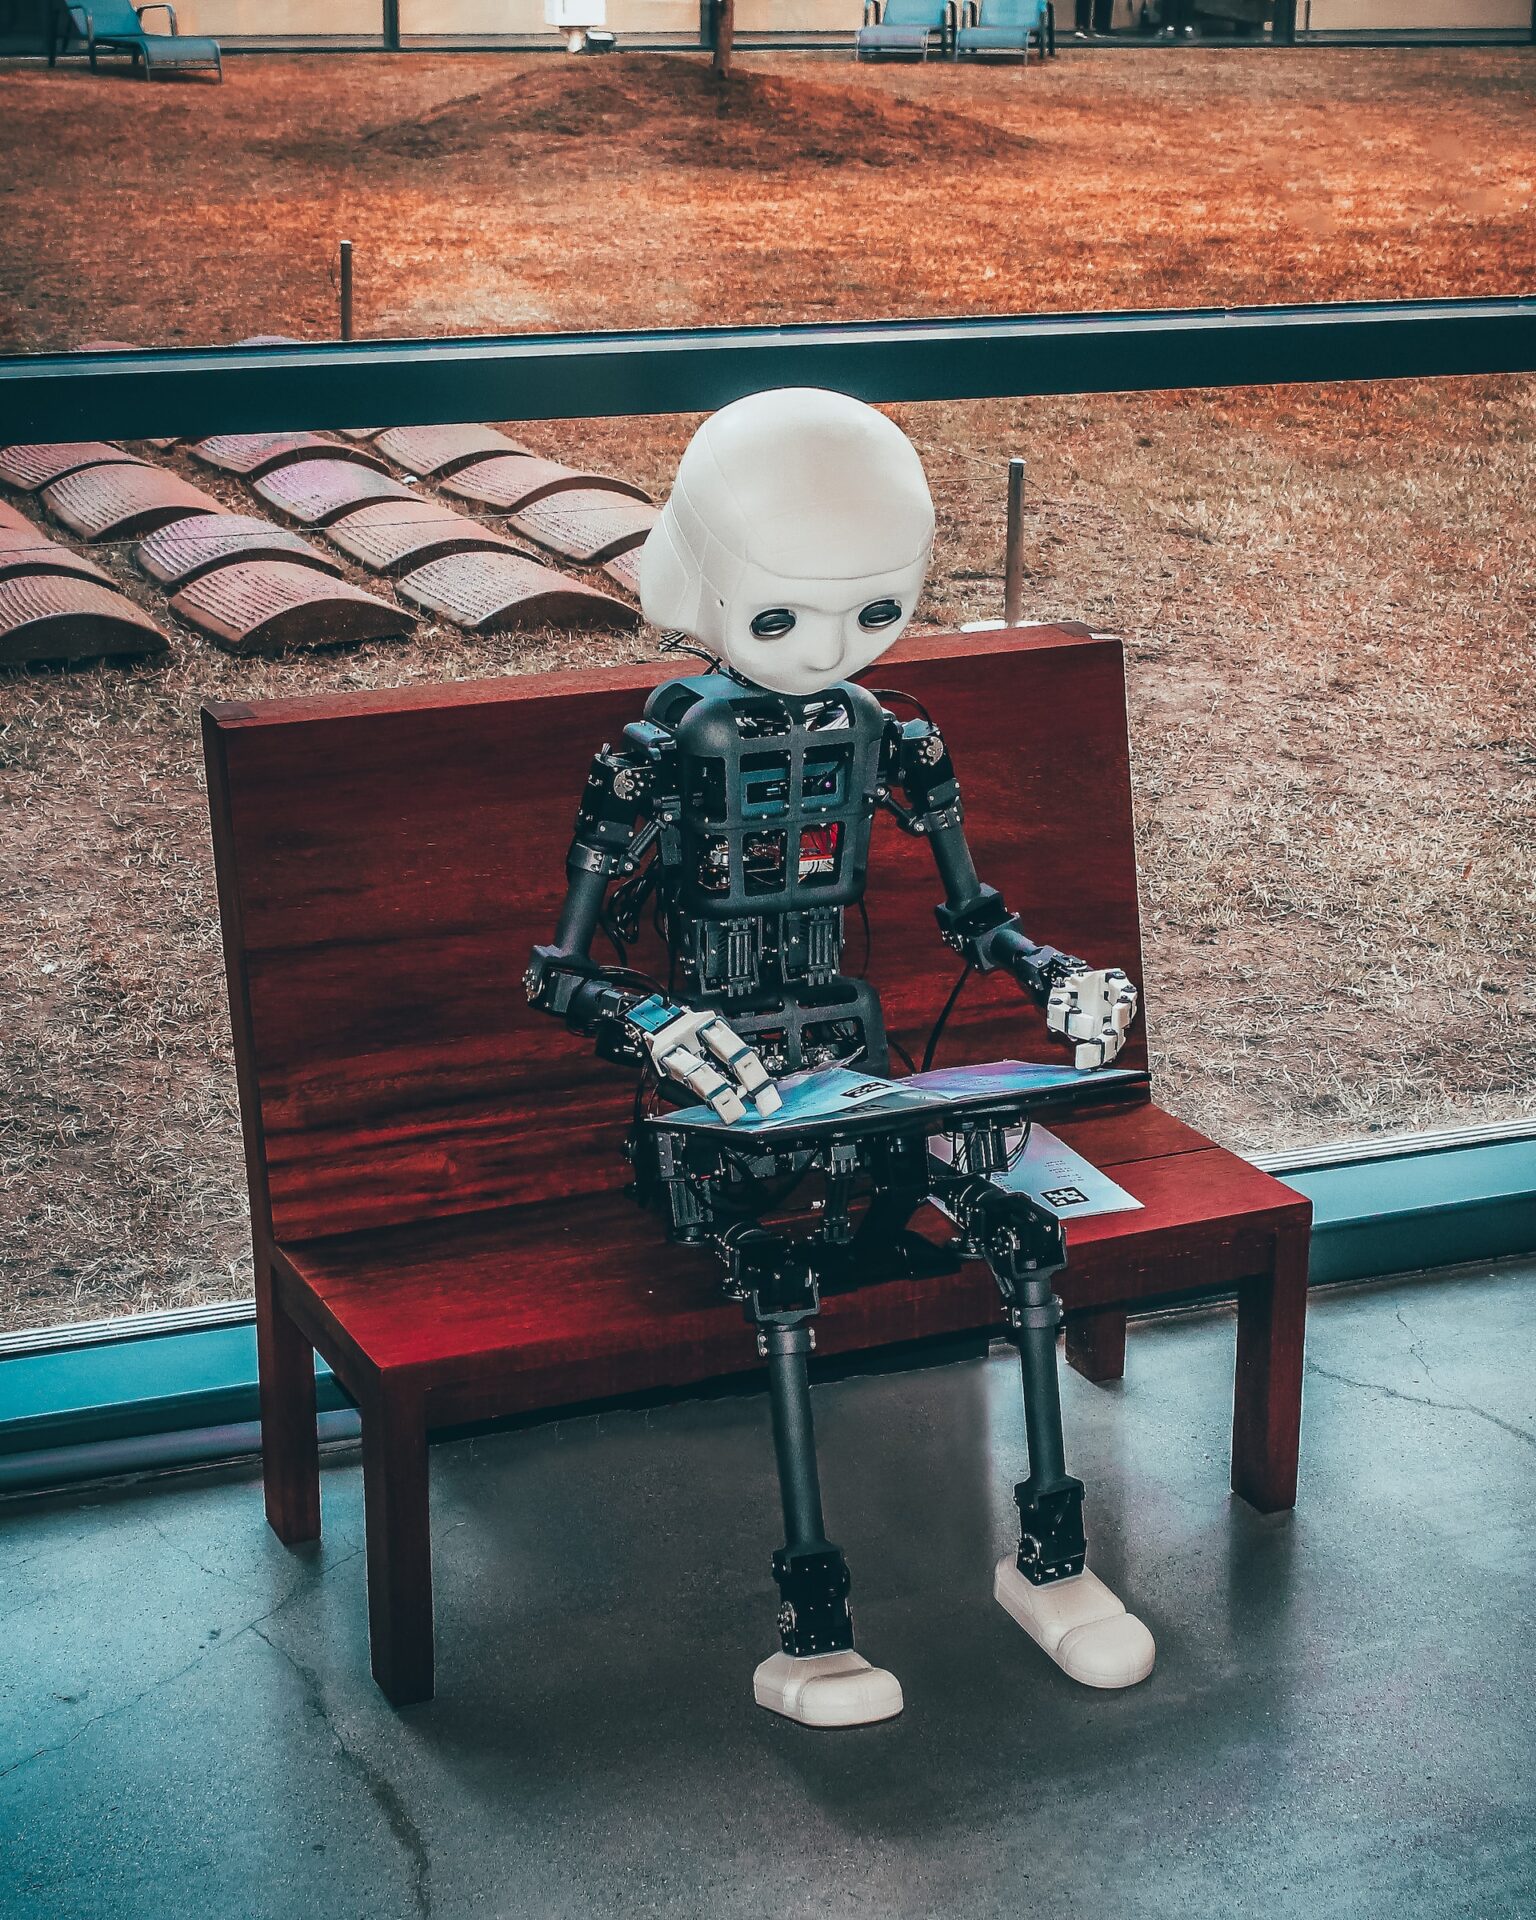 A render of a robot reading a magazine.